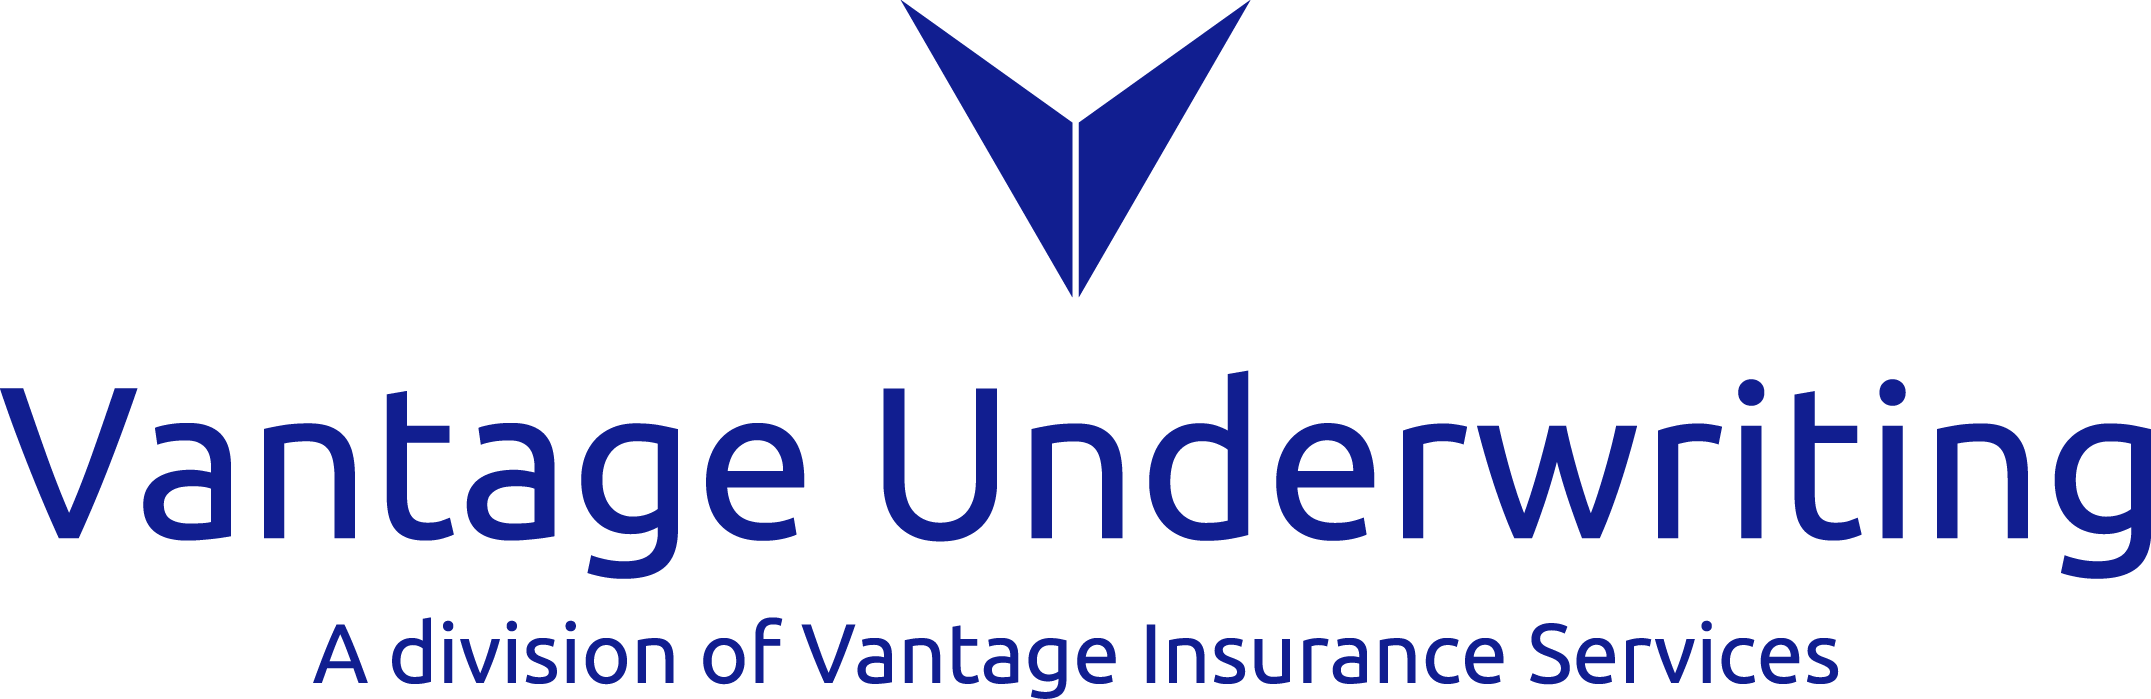 Vantage Logo - Vantage Underwriting Logo STACKED RGB | Vantage Insurance Services